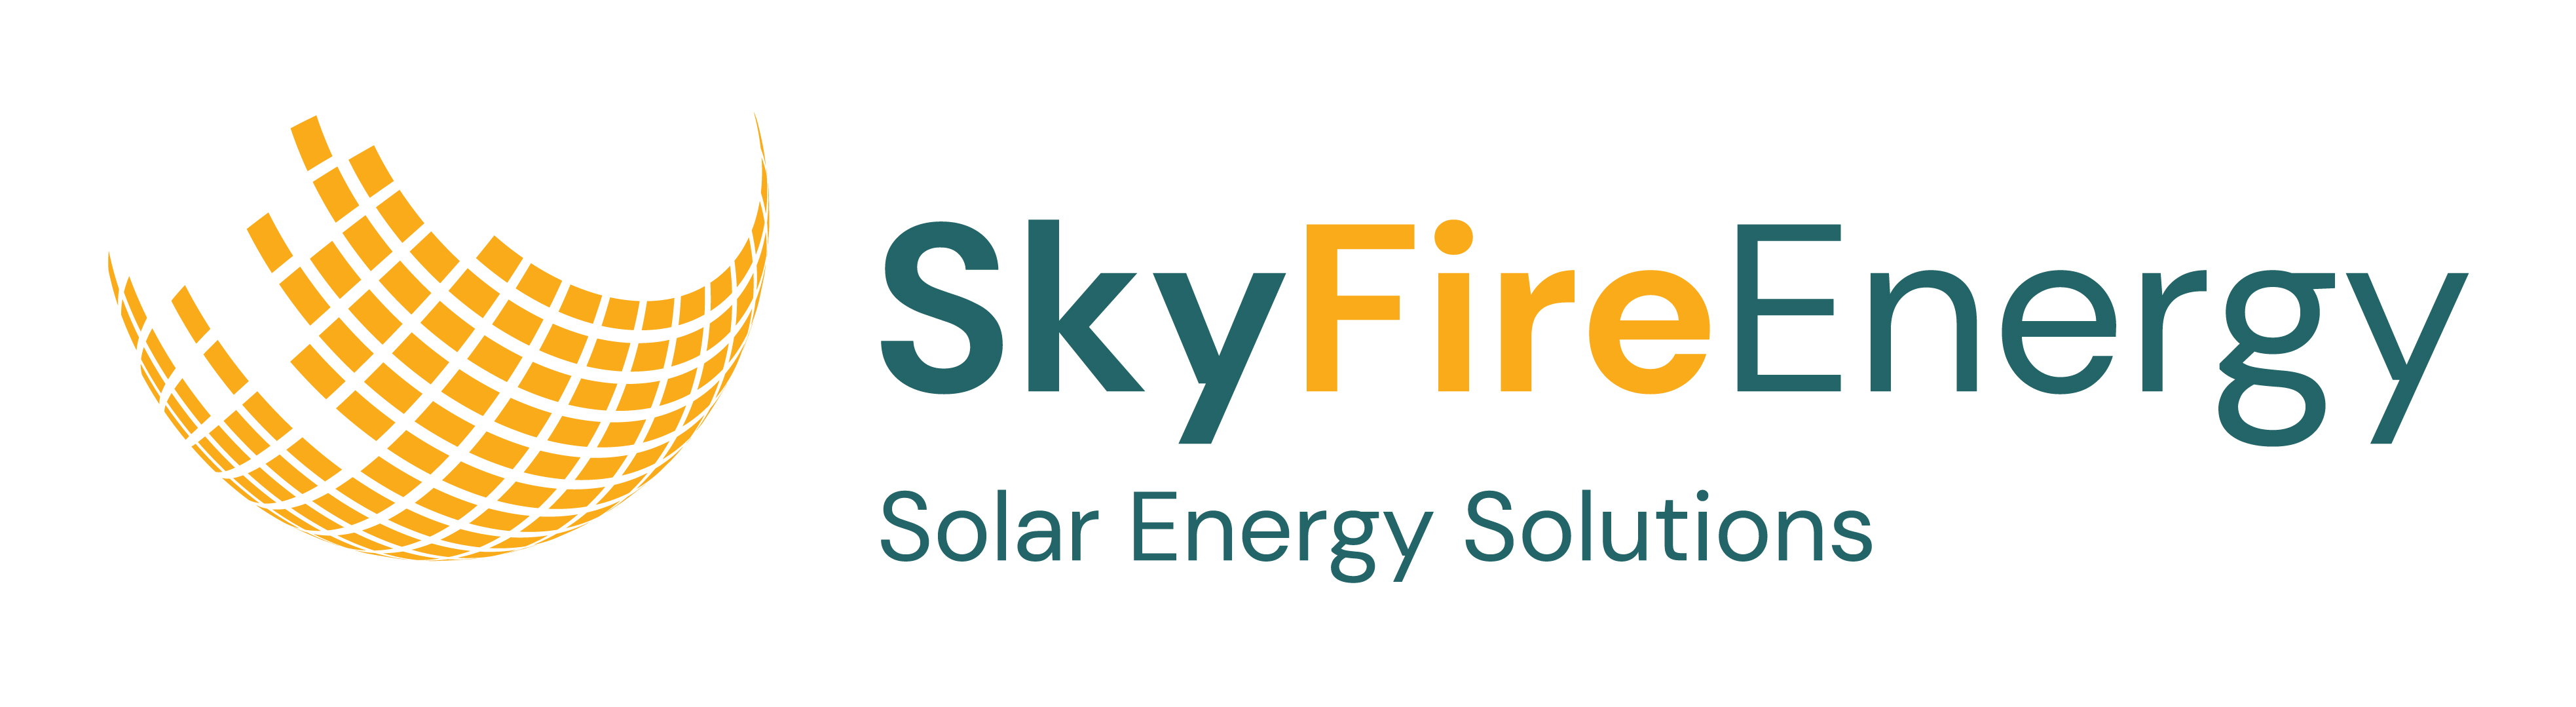 SkyFire Energy